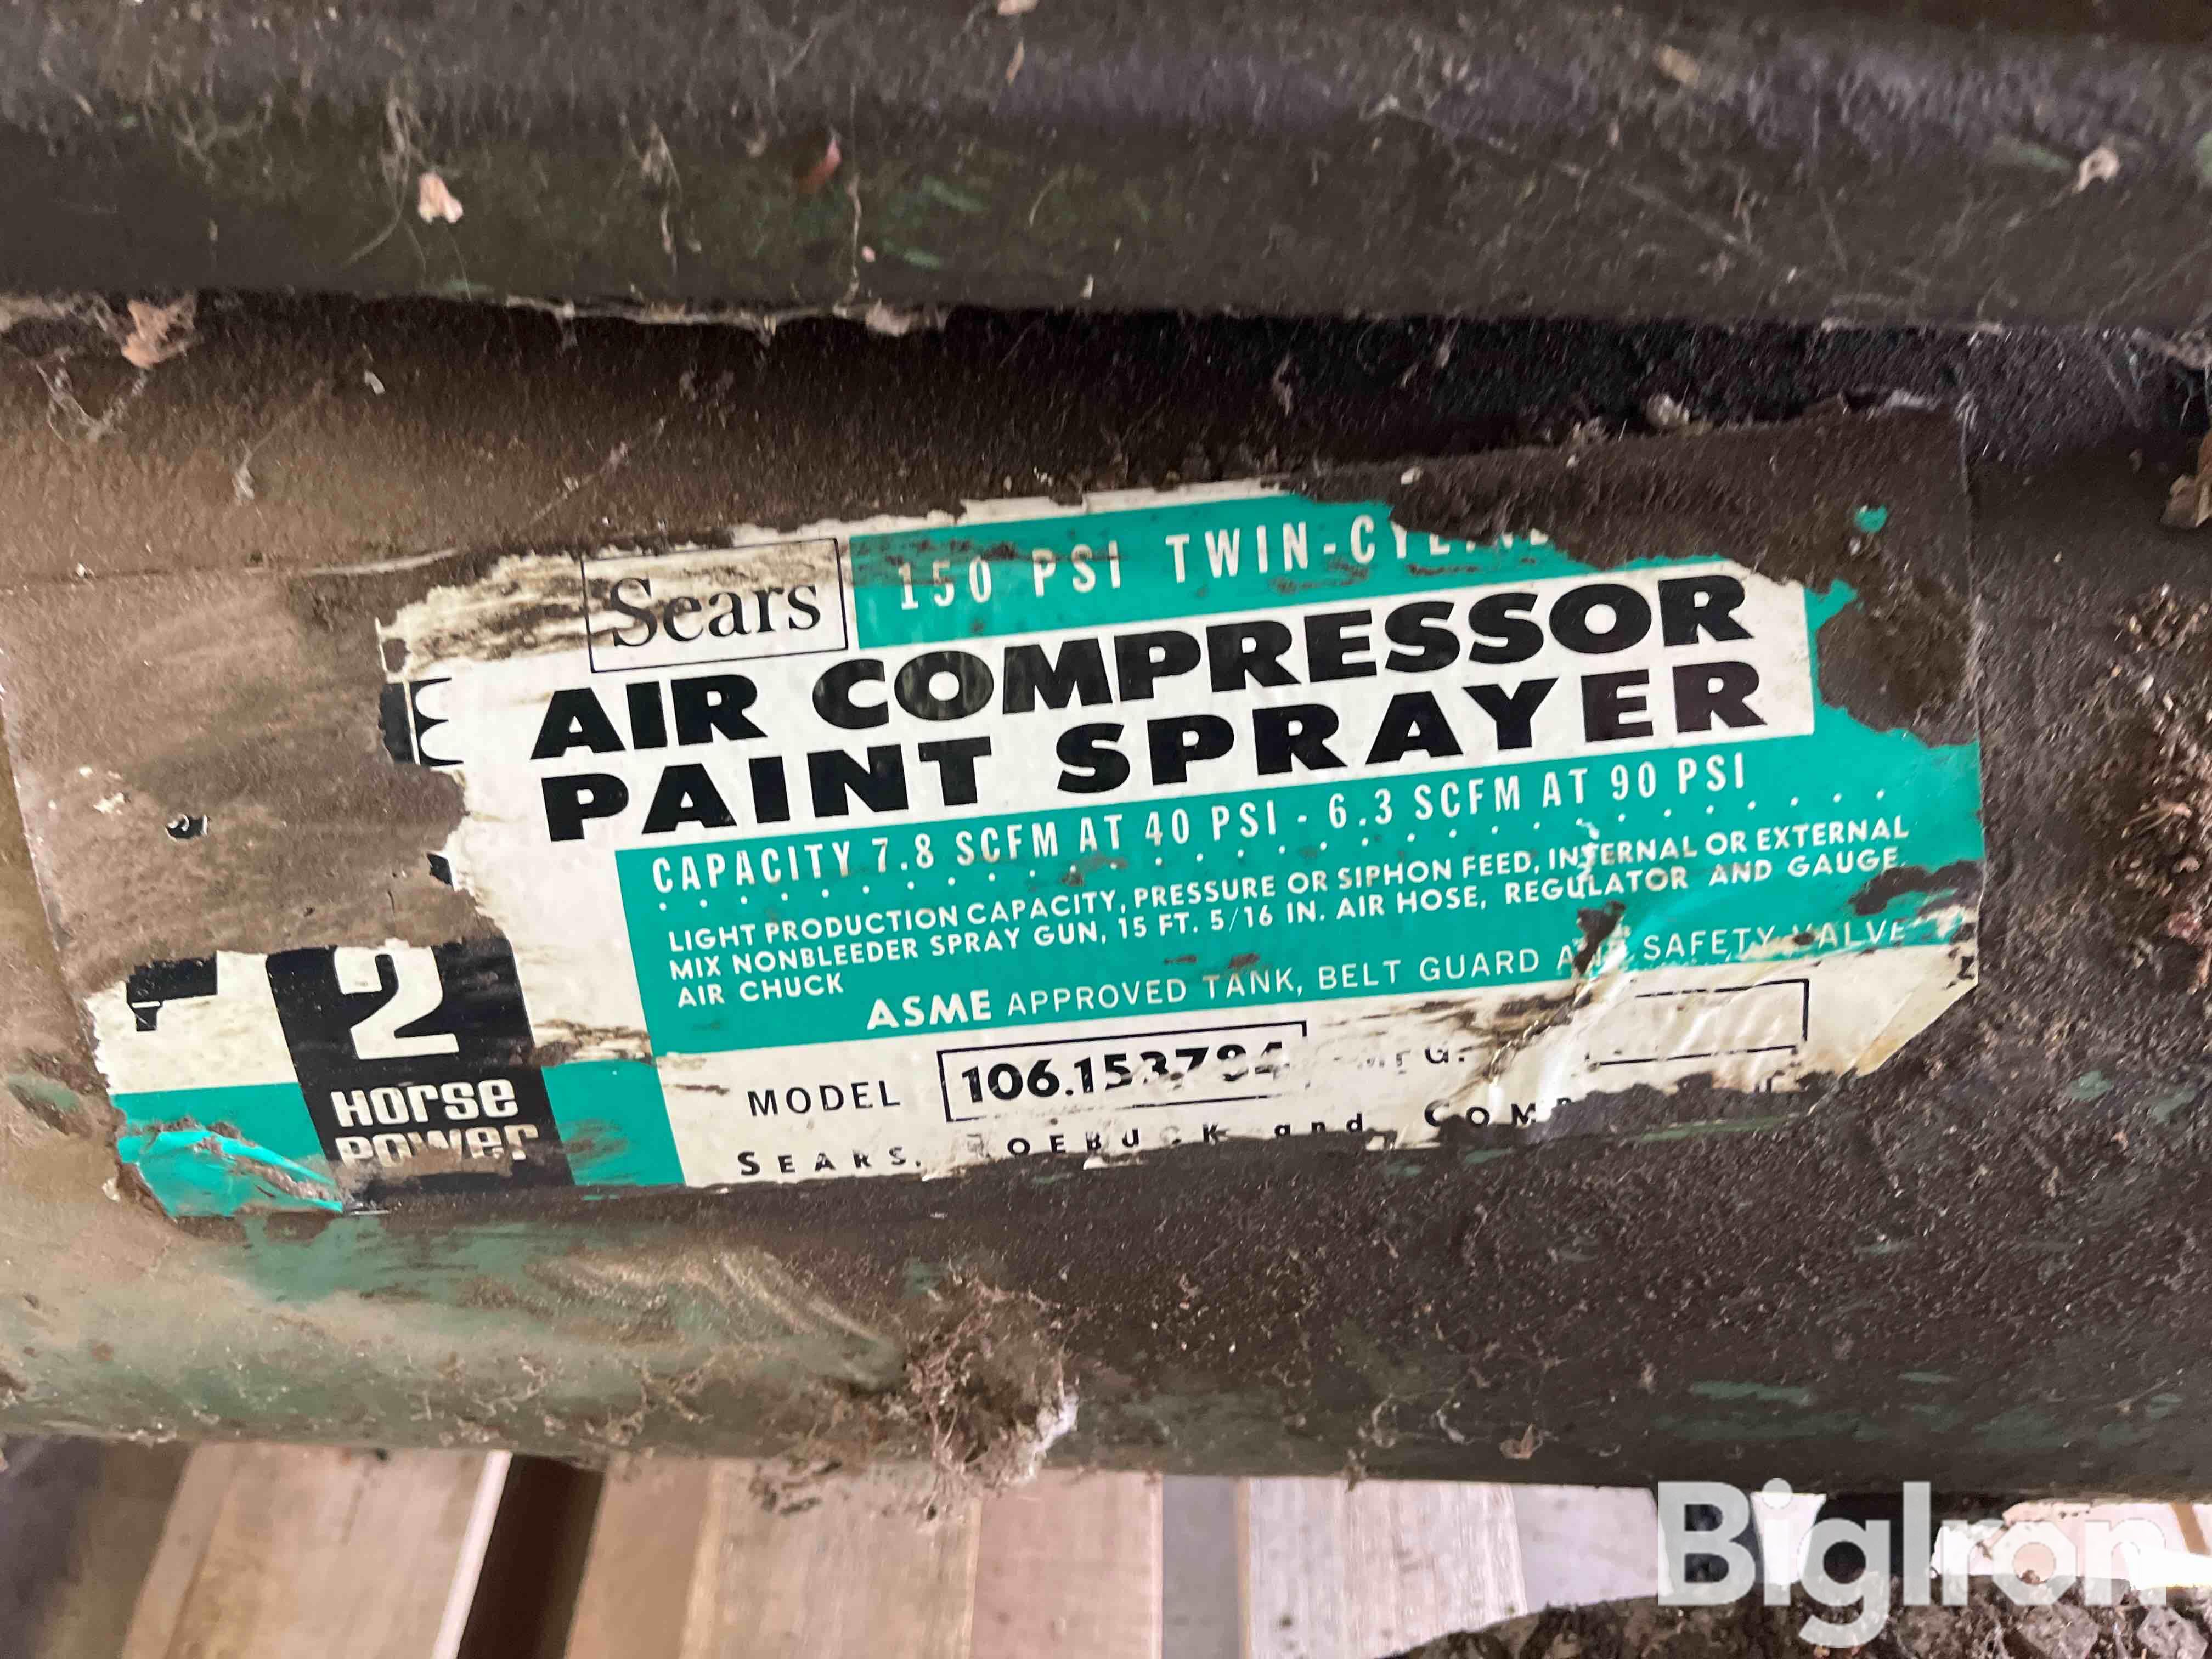 Sears Paint Sprayer Air Compressor